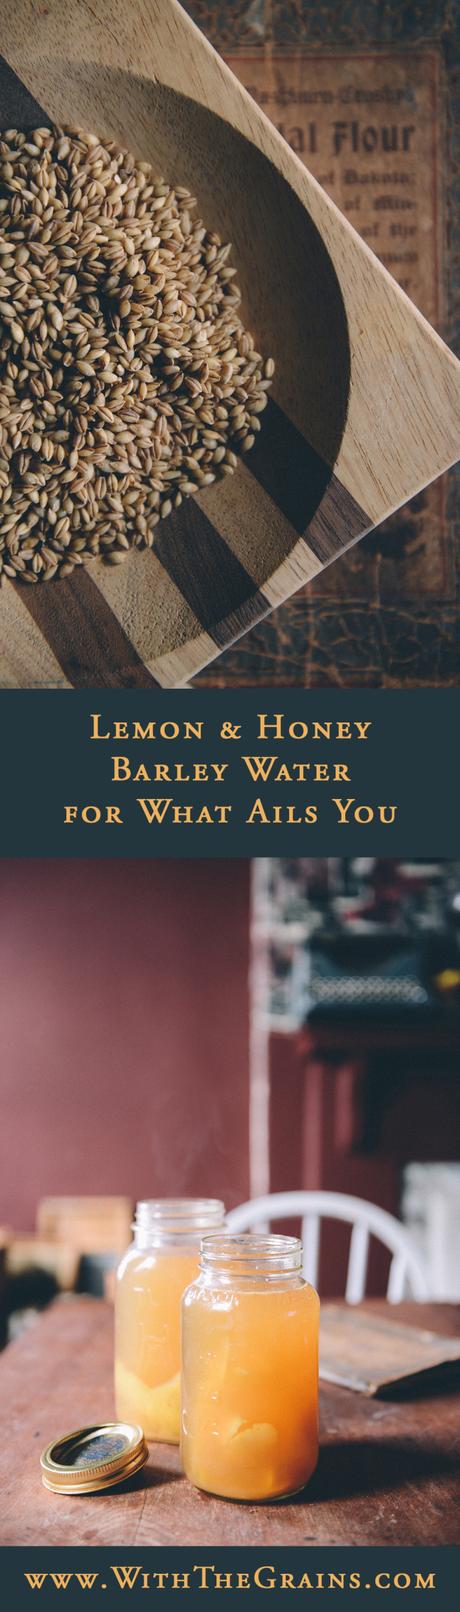 Lemon & Honey Barley Water // www.WithTheGrains.com